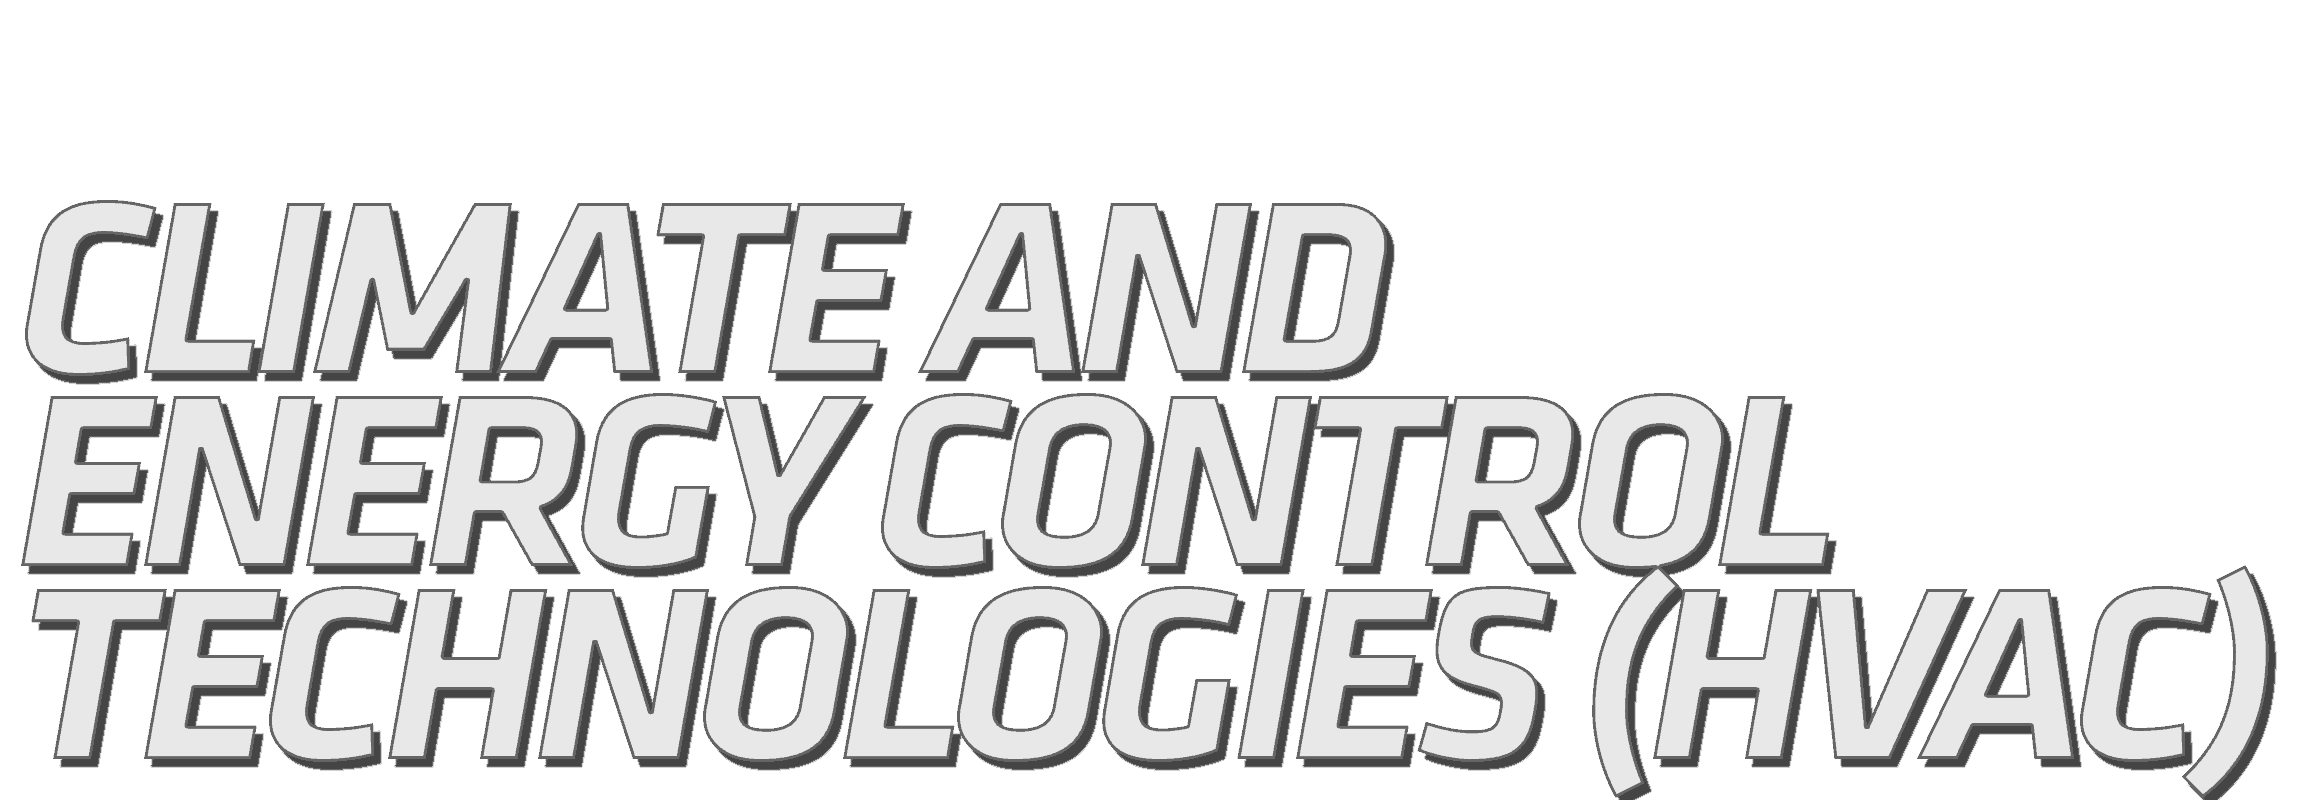 Climate & Energy Control Technologies (HVAC)